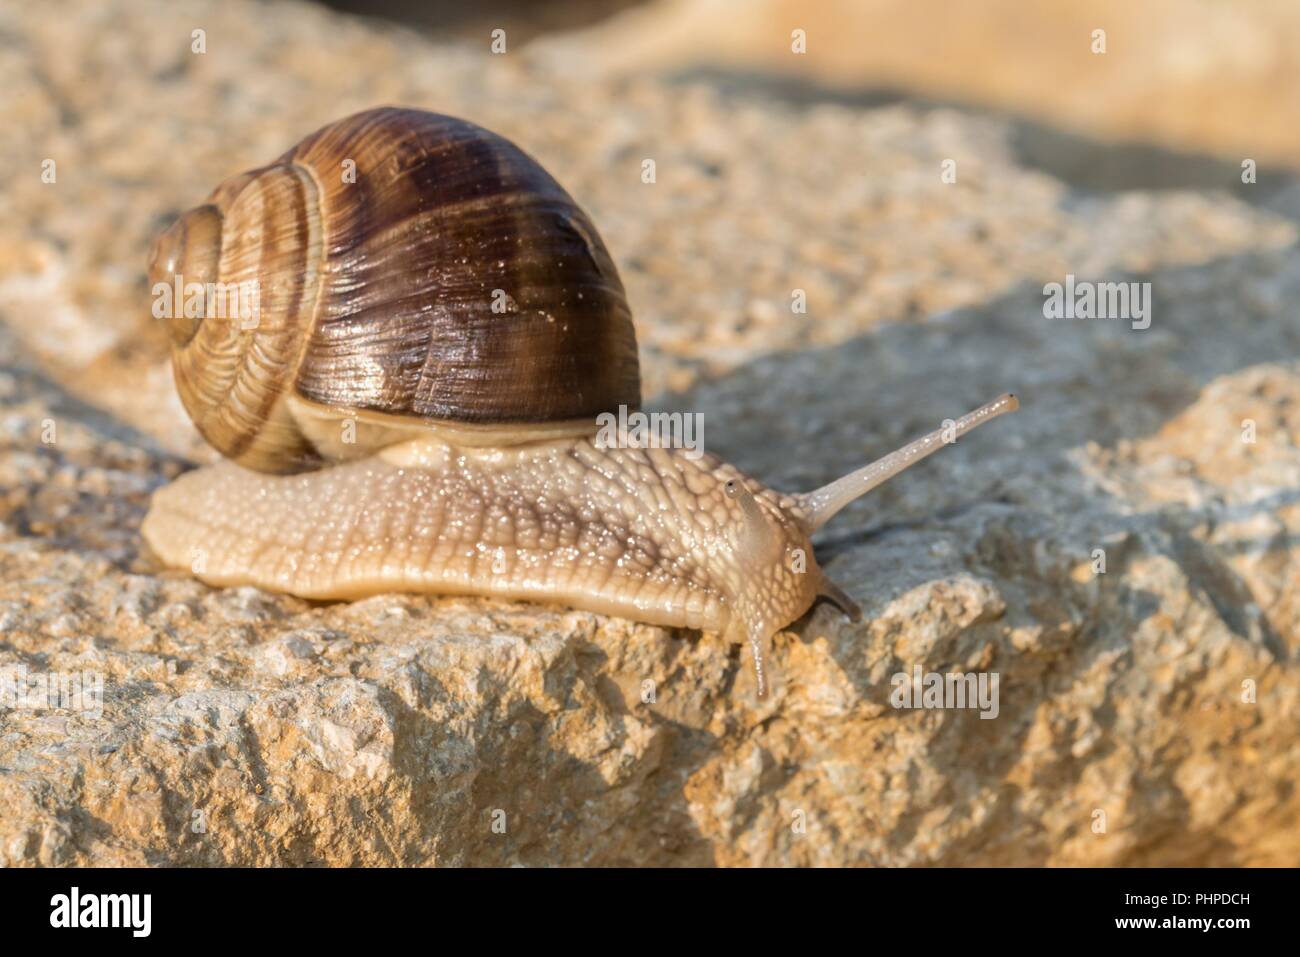 Brown Roman snail on a stone Stock Photo